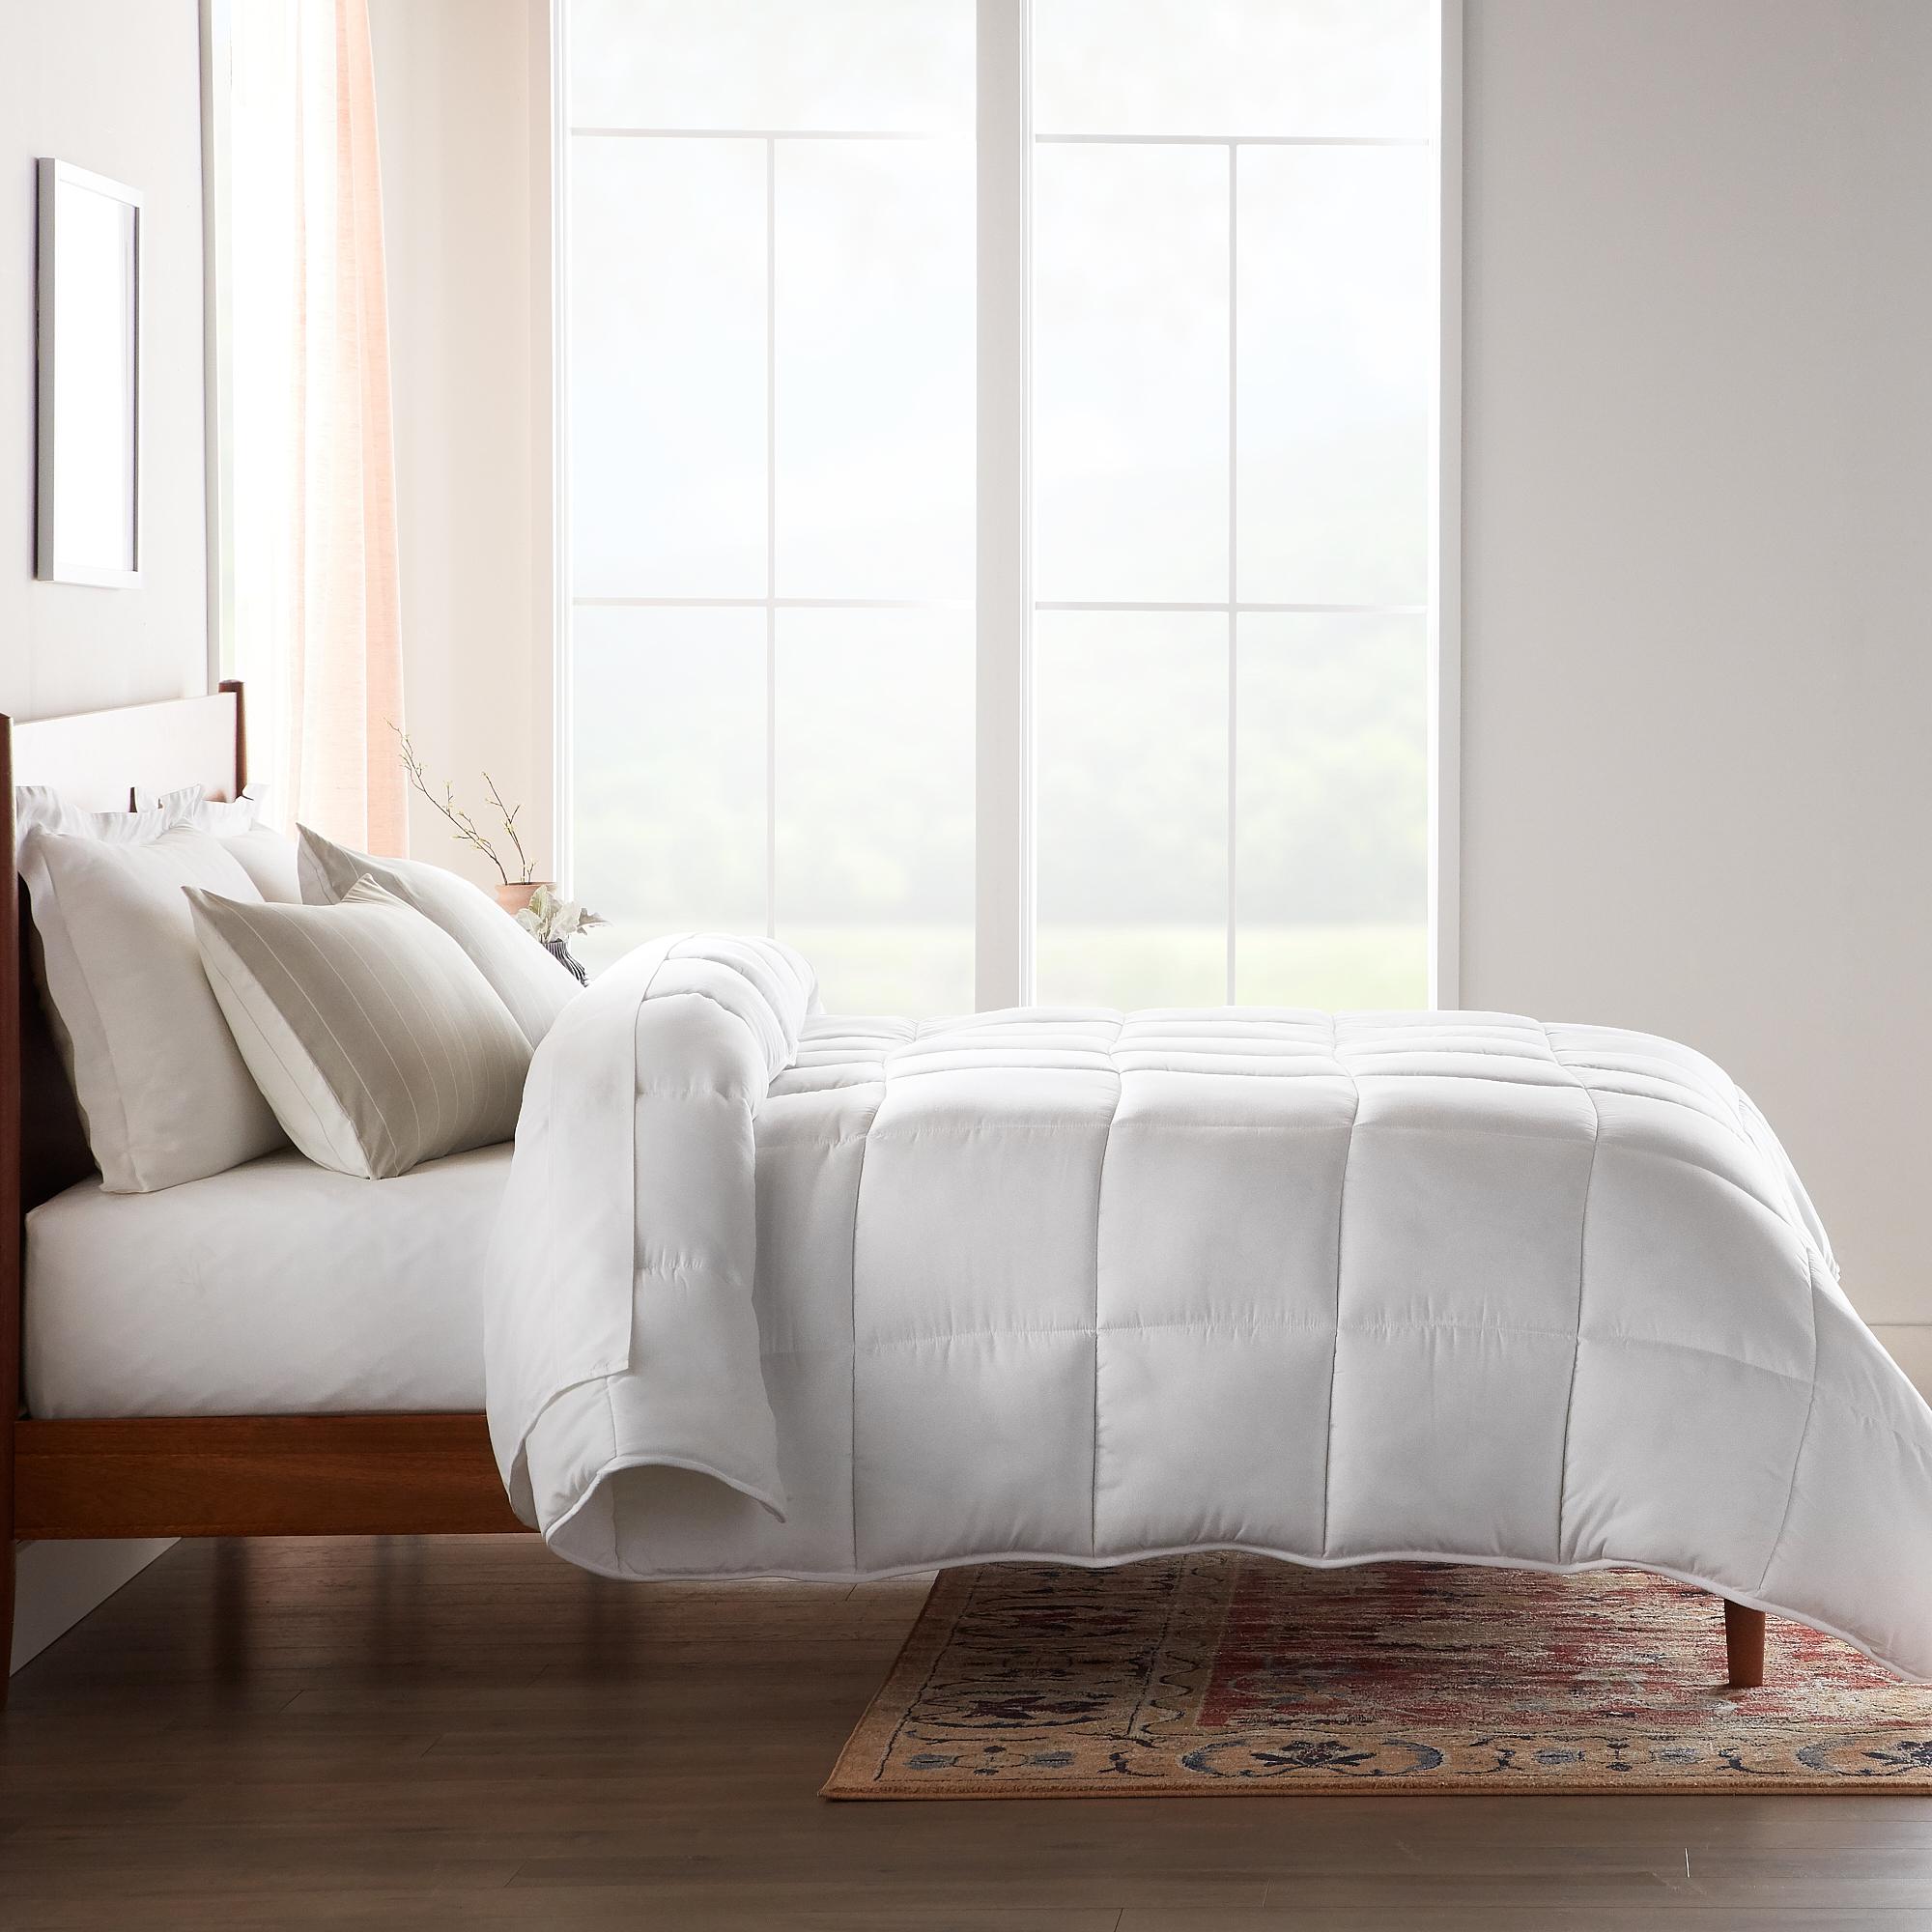 Rest Haven All-Season Down Alternative Comforter, Queen, White - image 6 of 15